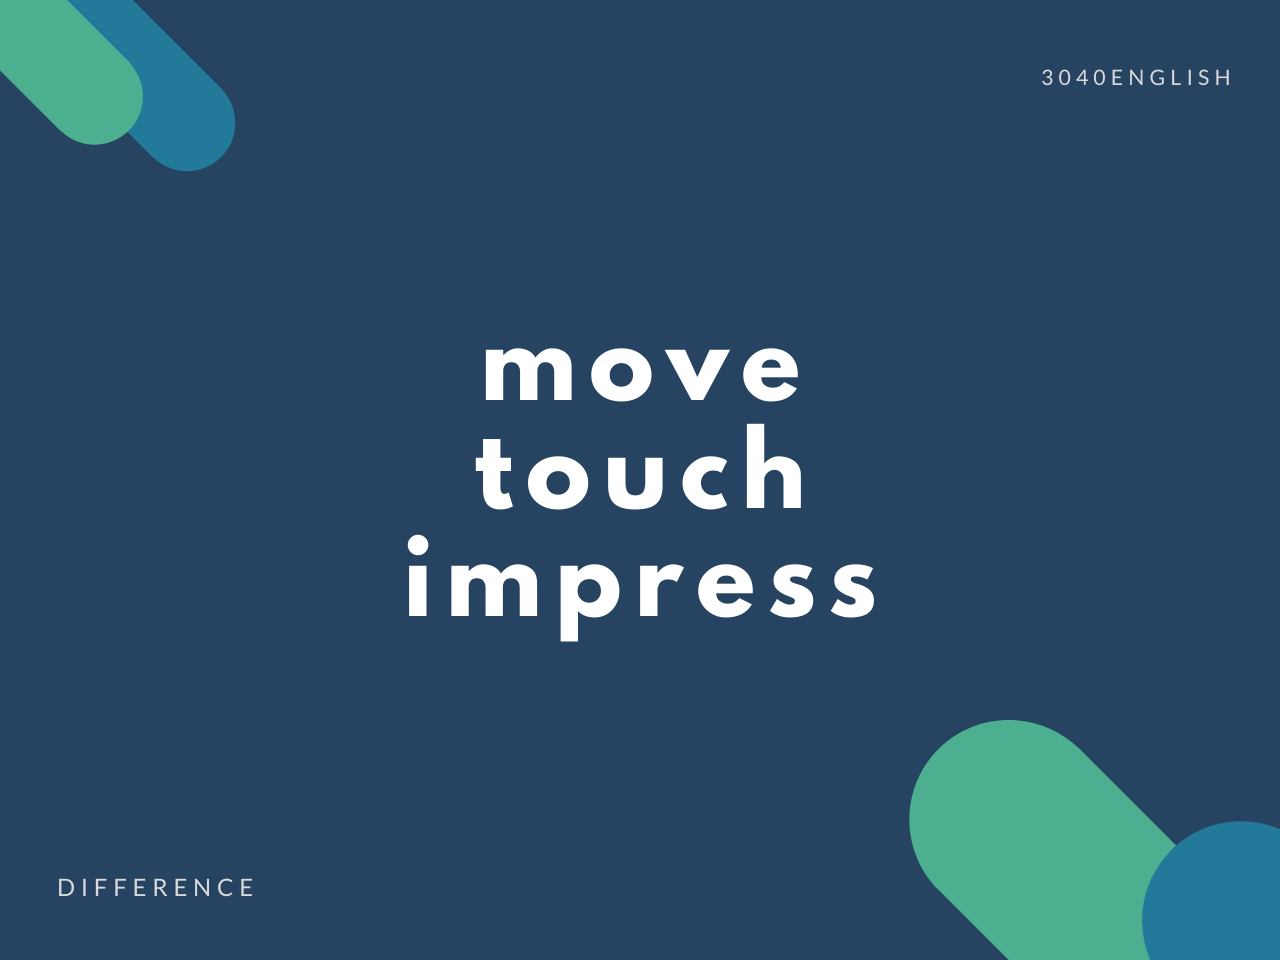 【impress, move, touch の違い】「感動する」の英語表現【例文あり】